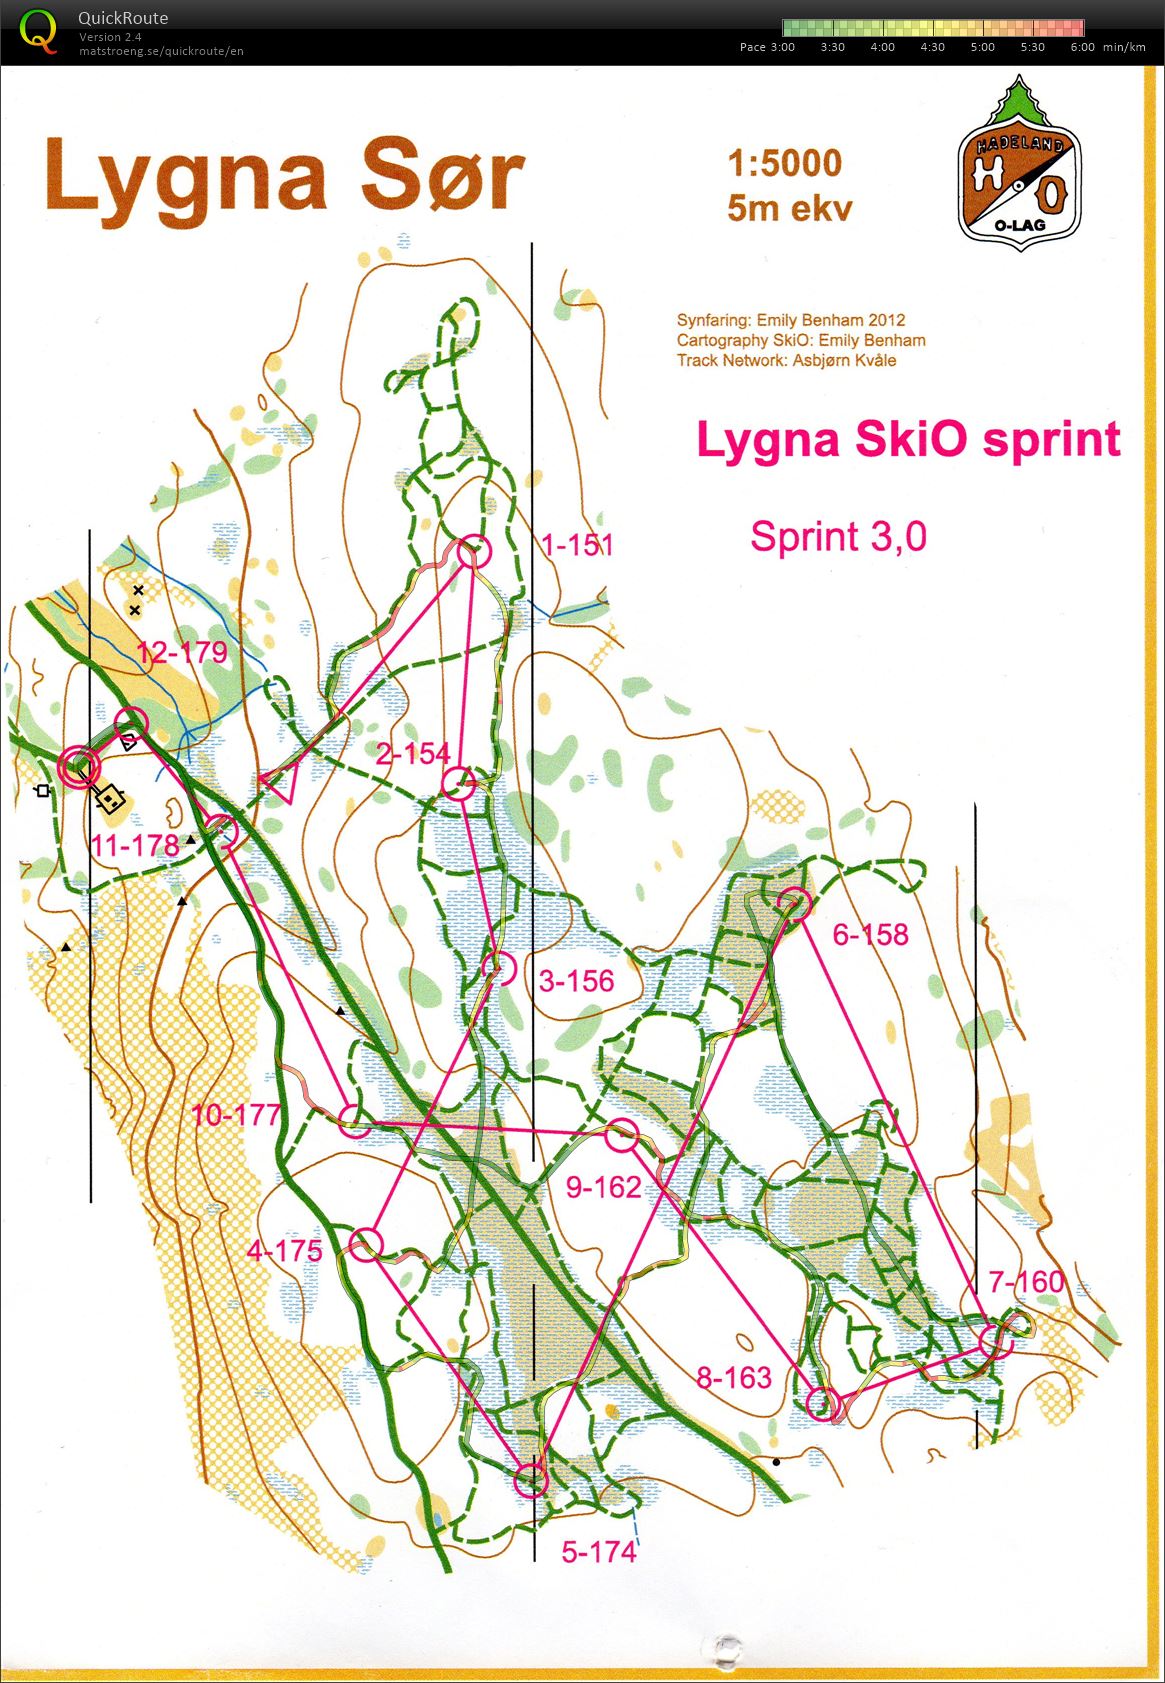 Lygna NC sr ski-o sprint (03/01/2015)